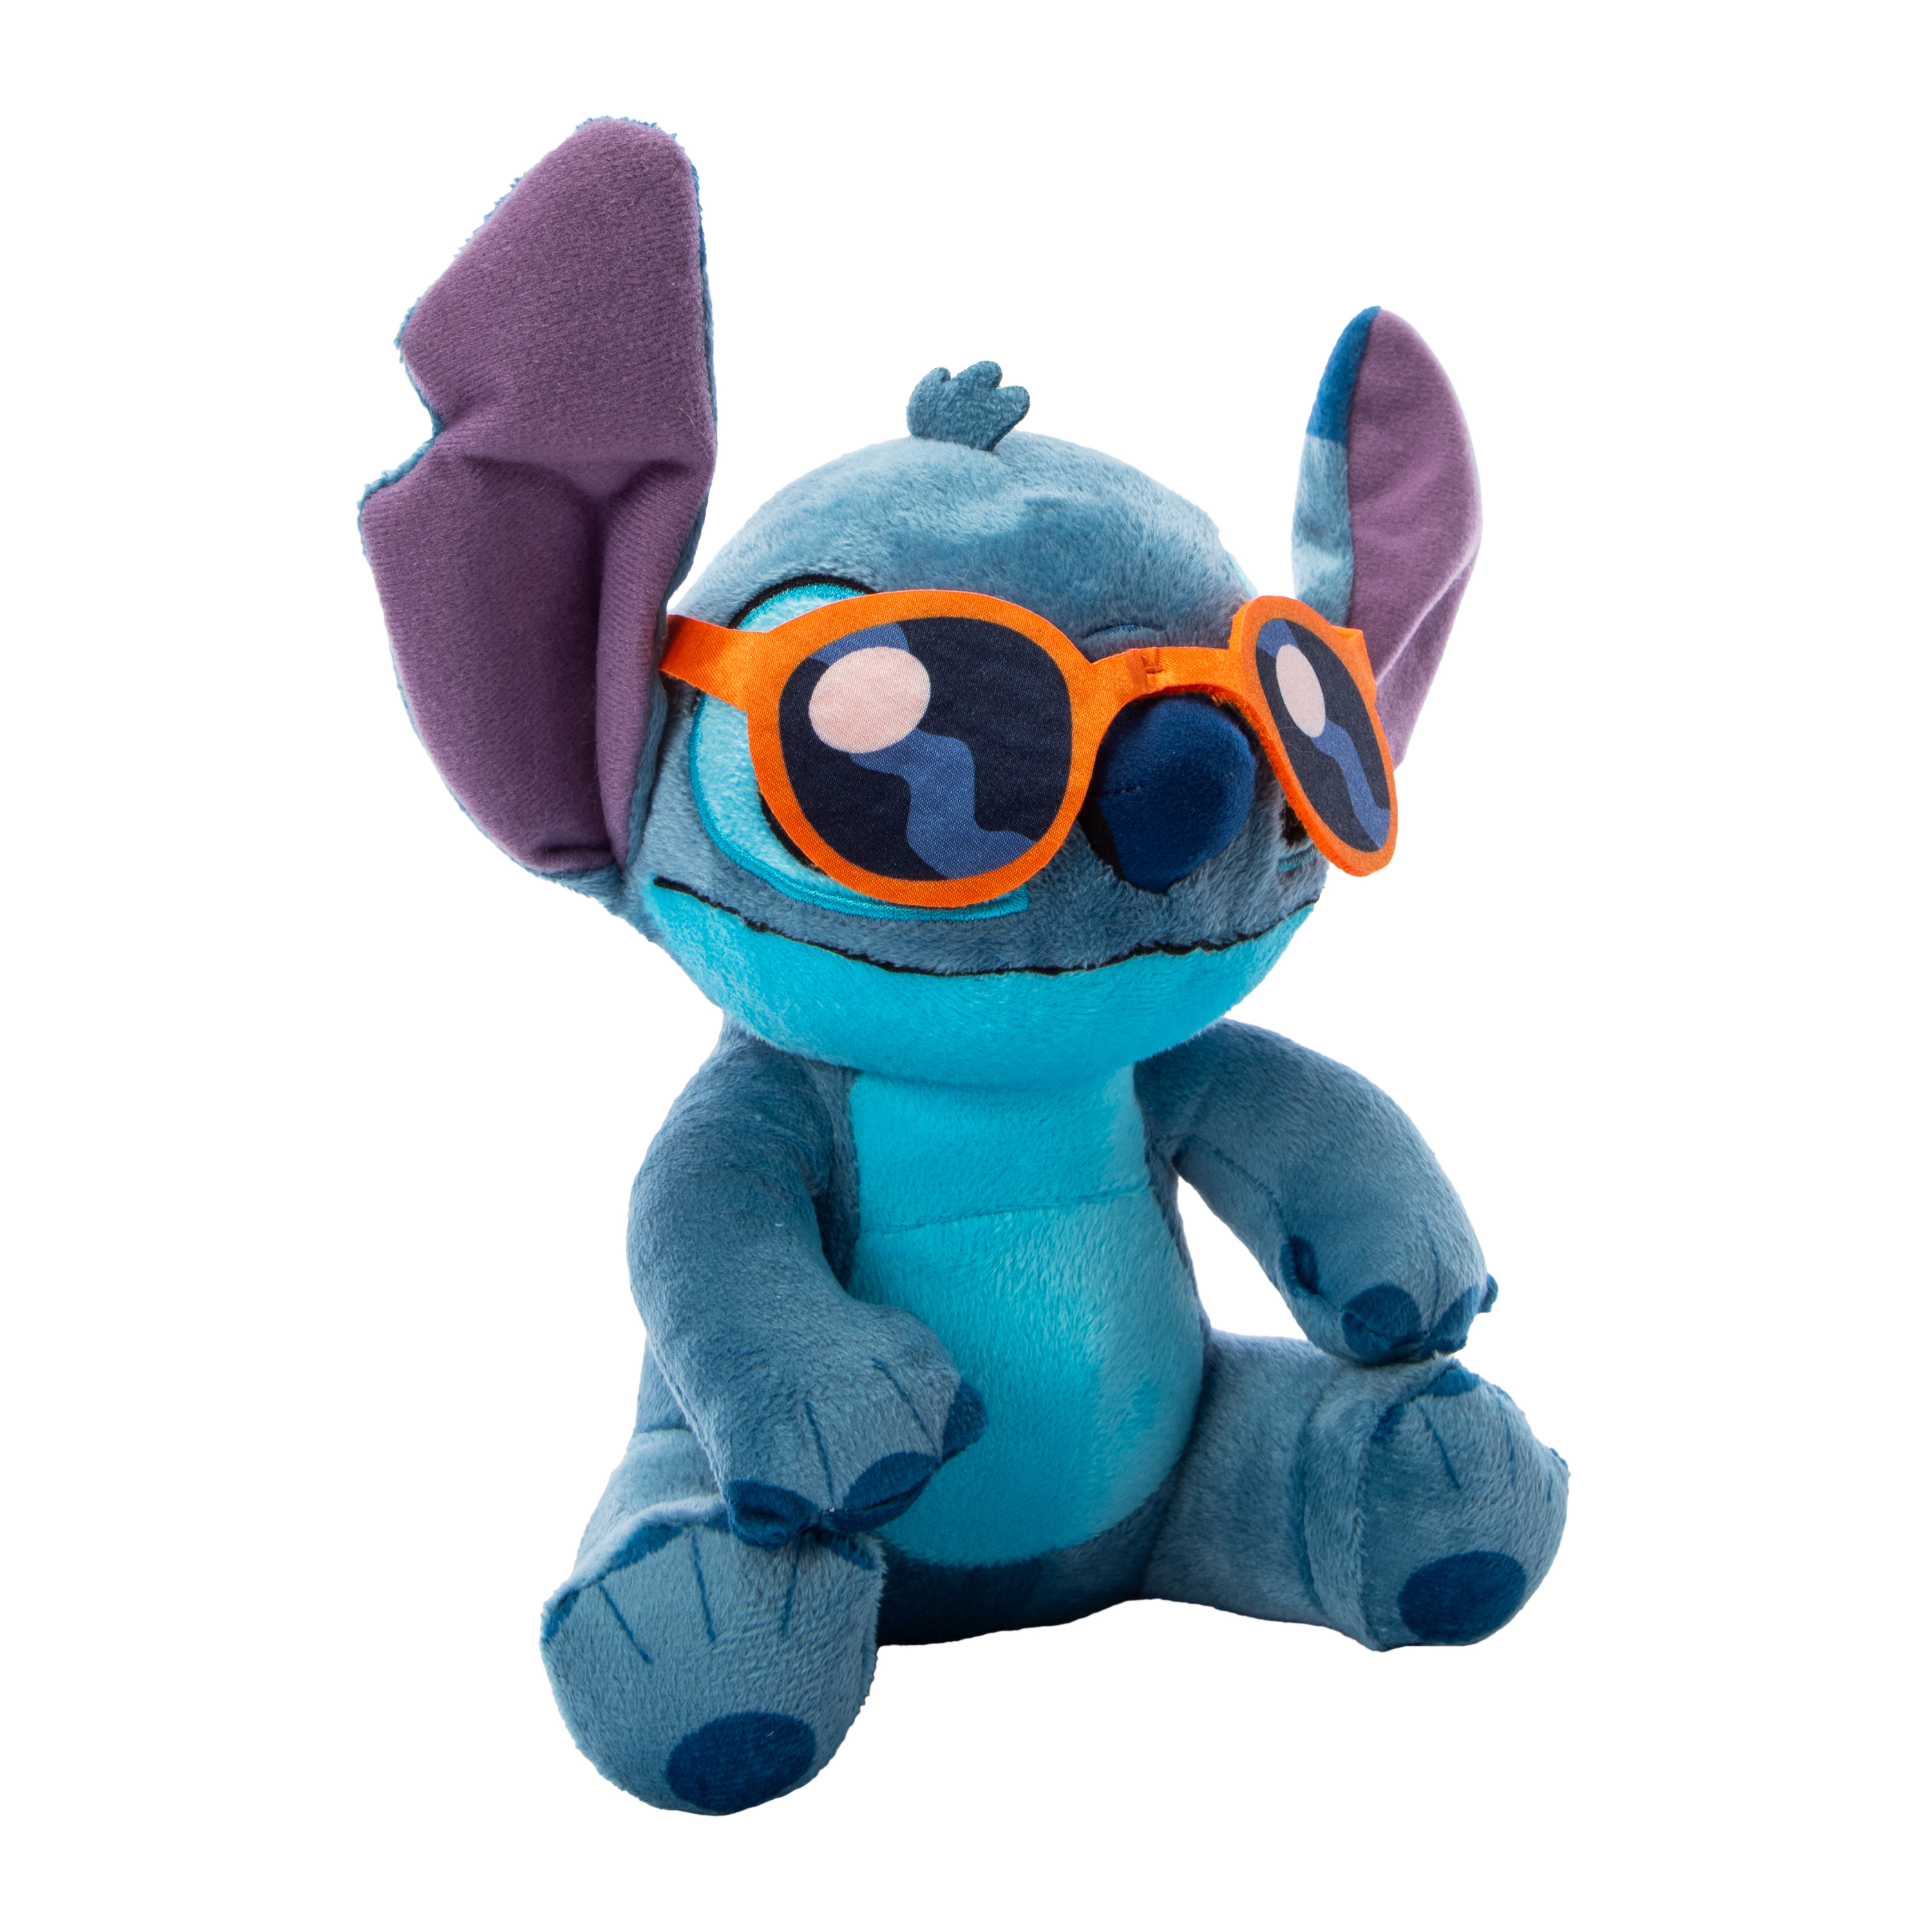 Disney Stitch Sunglasses Plush 7.88in